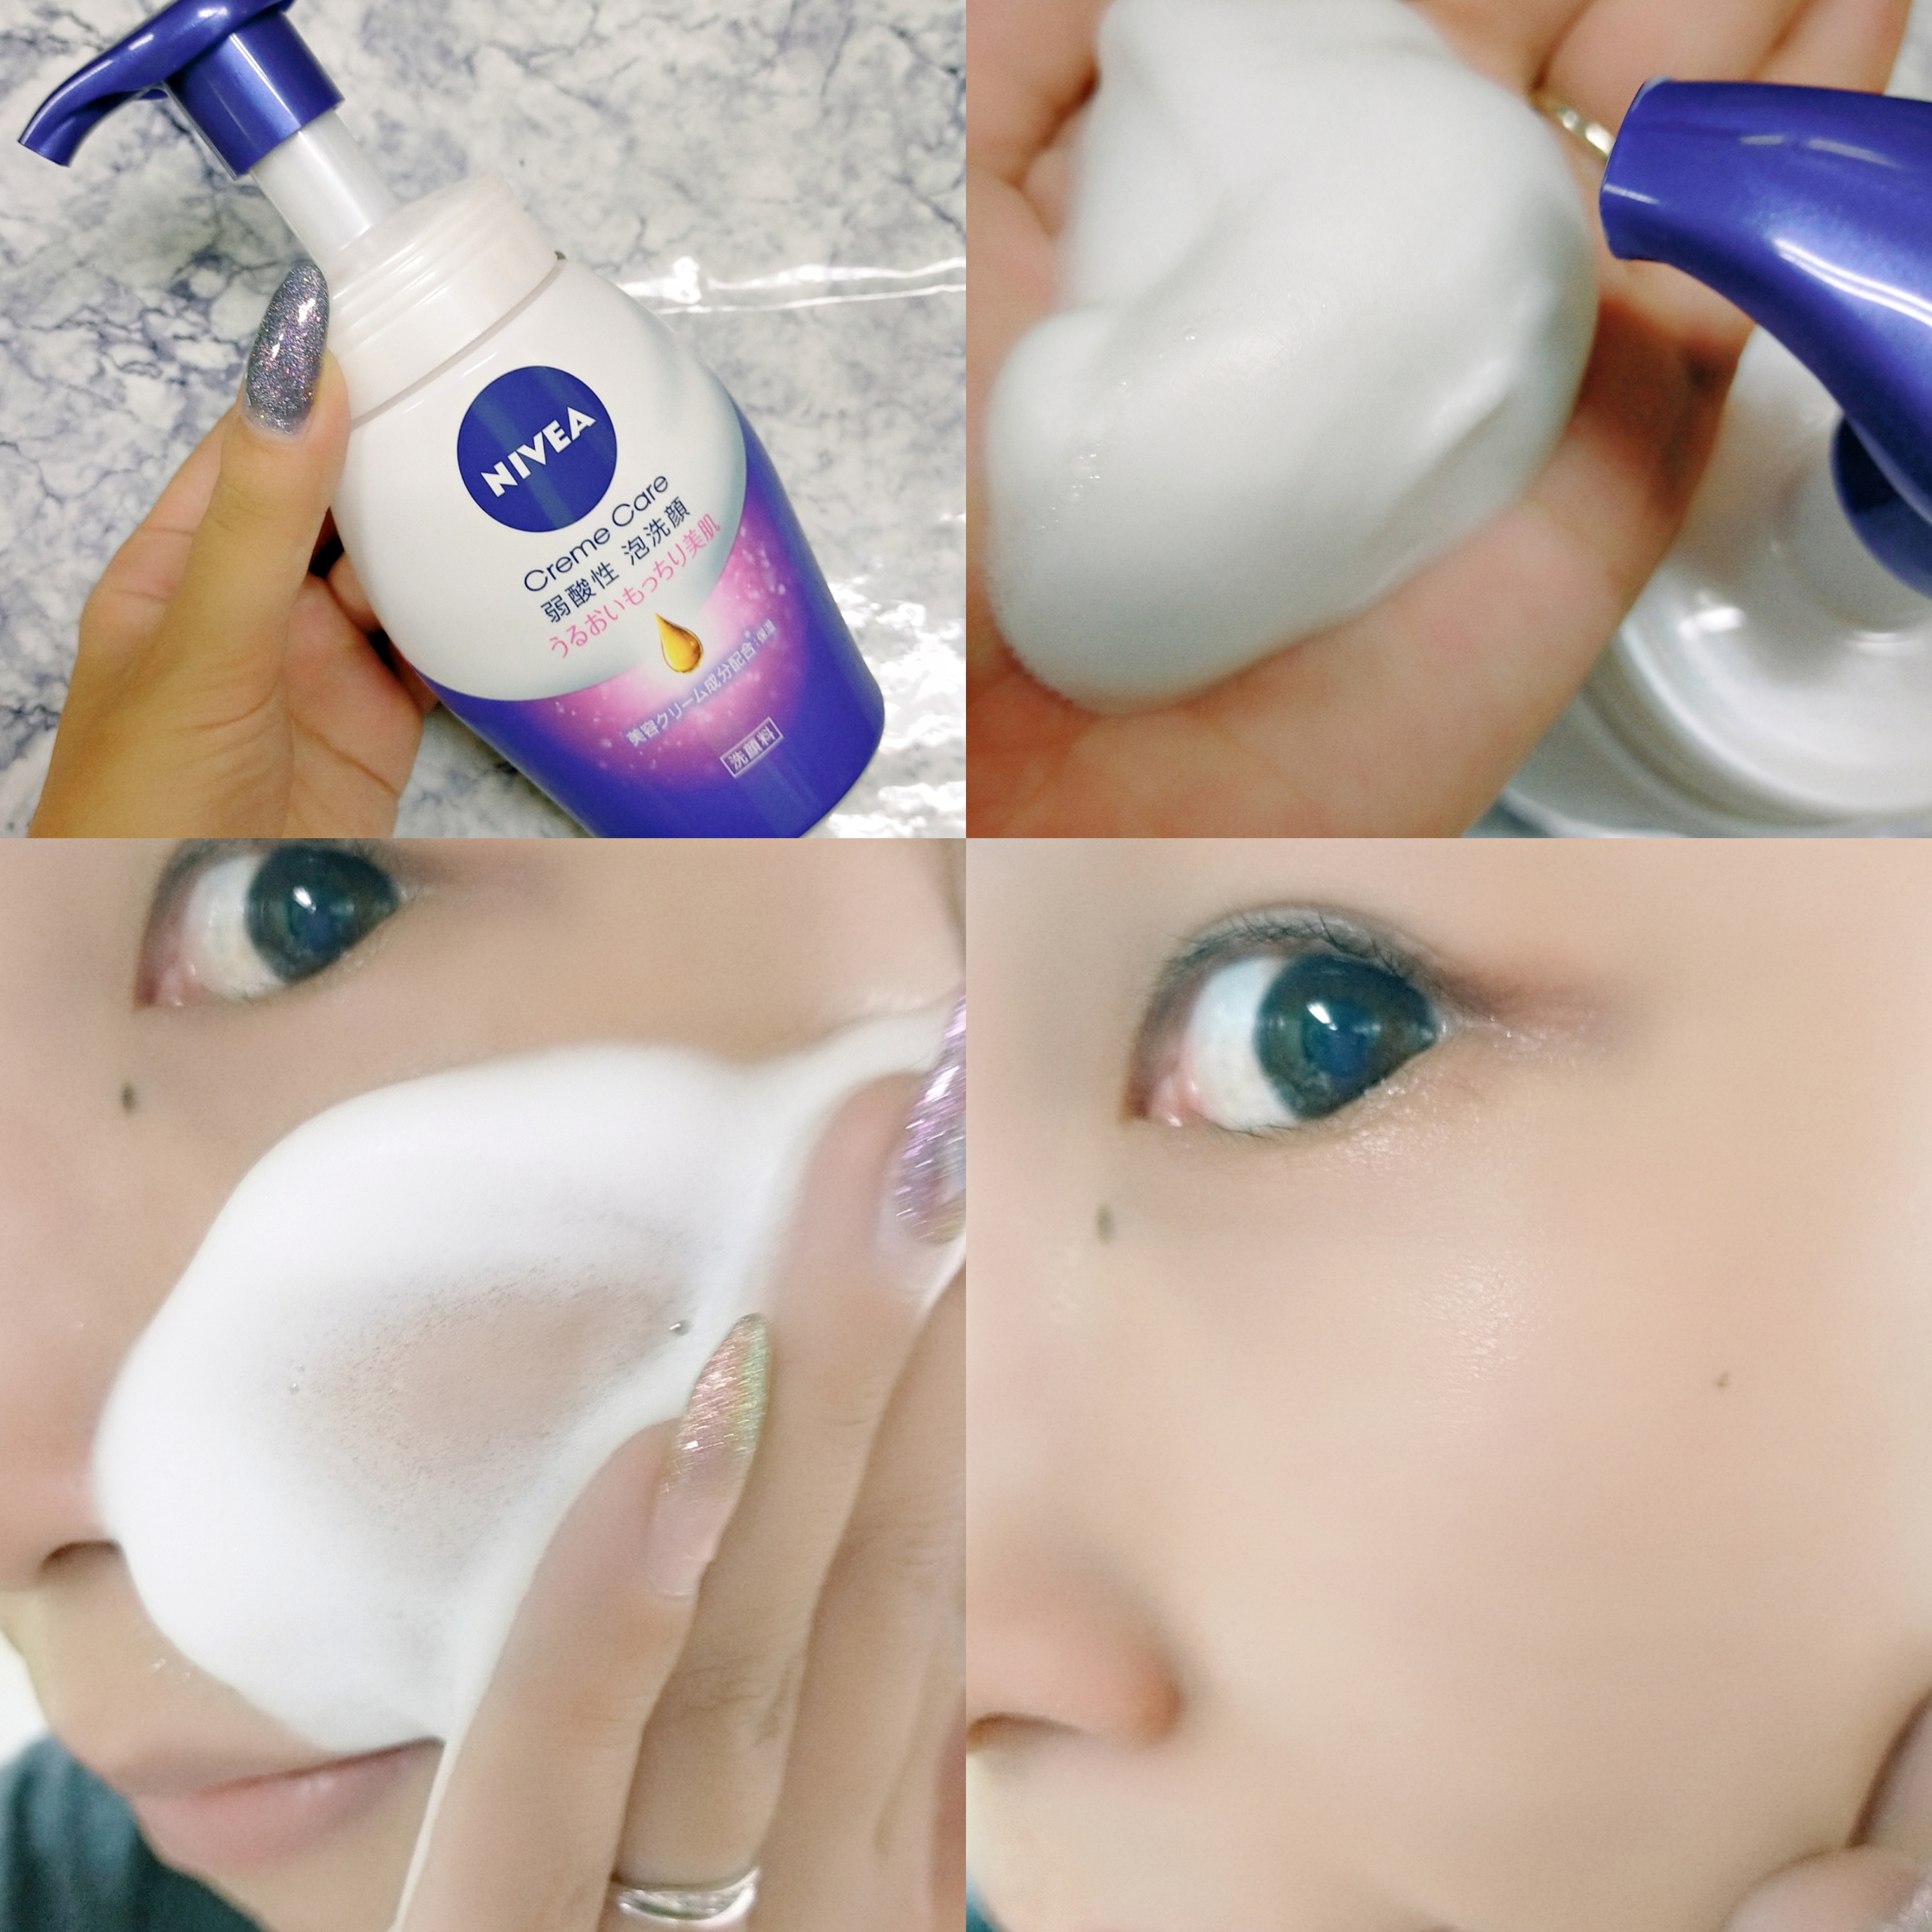 NIVEA(ニベア) クリアビューティー弱酸性泡洗顔 もっちり美肌の良い点・メリットに関するみこさんの口コミ画像2